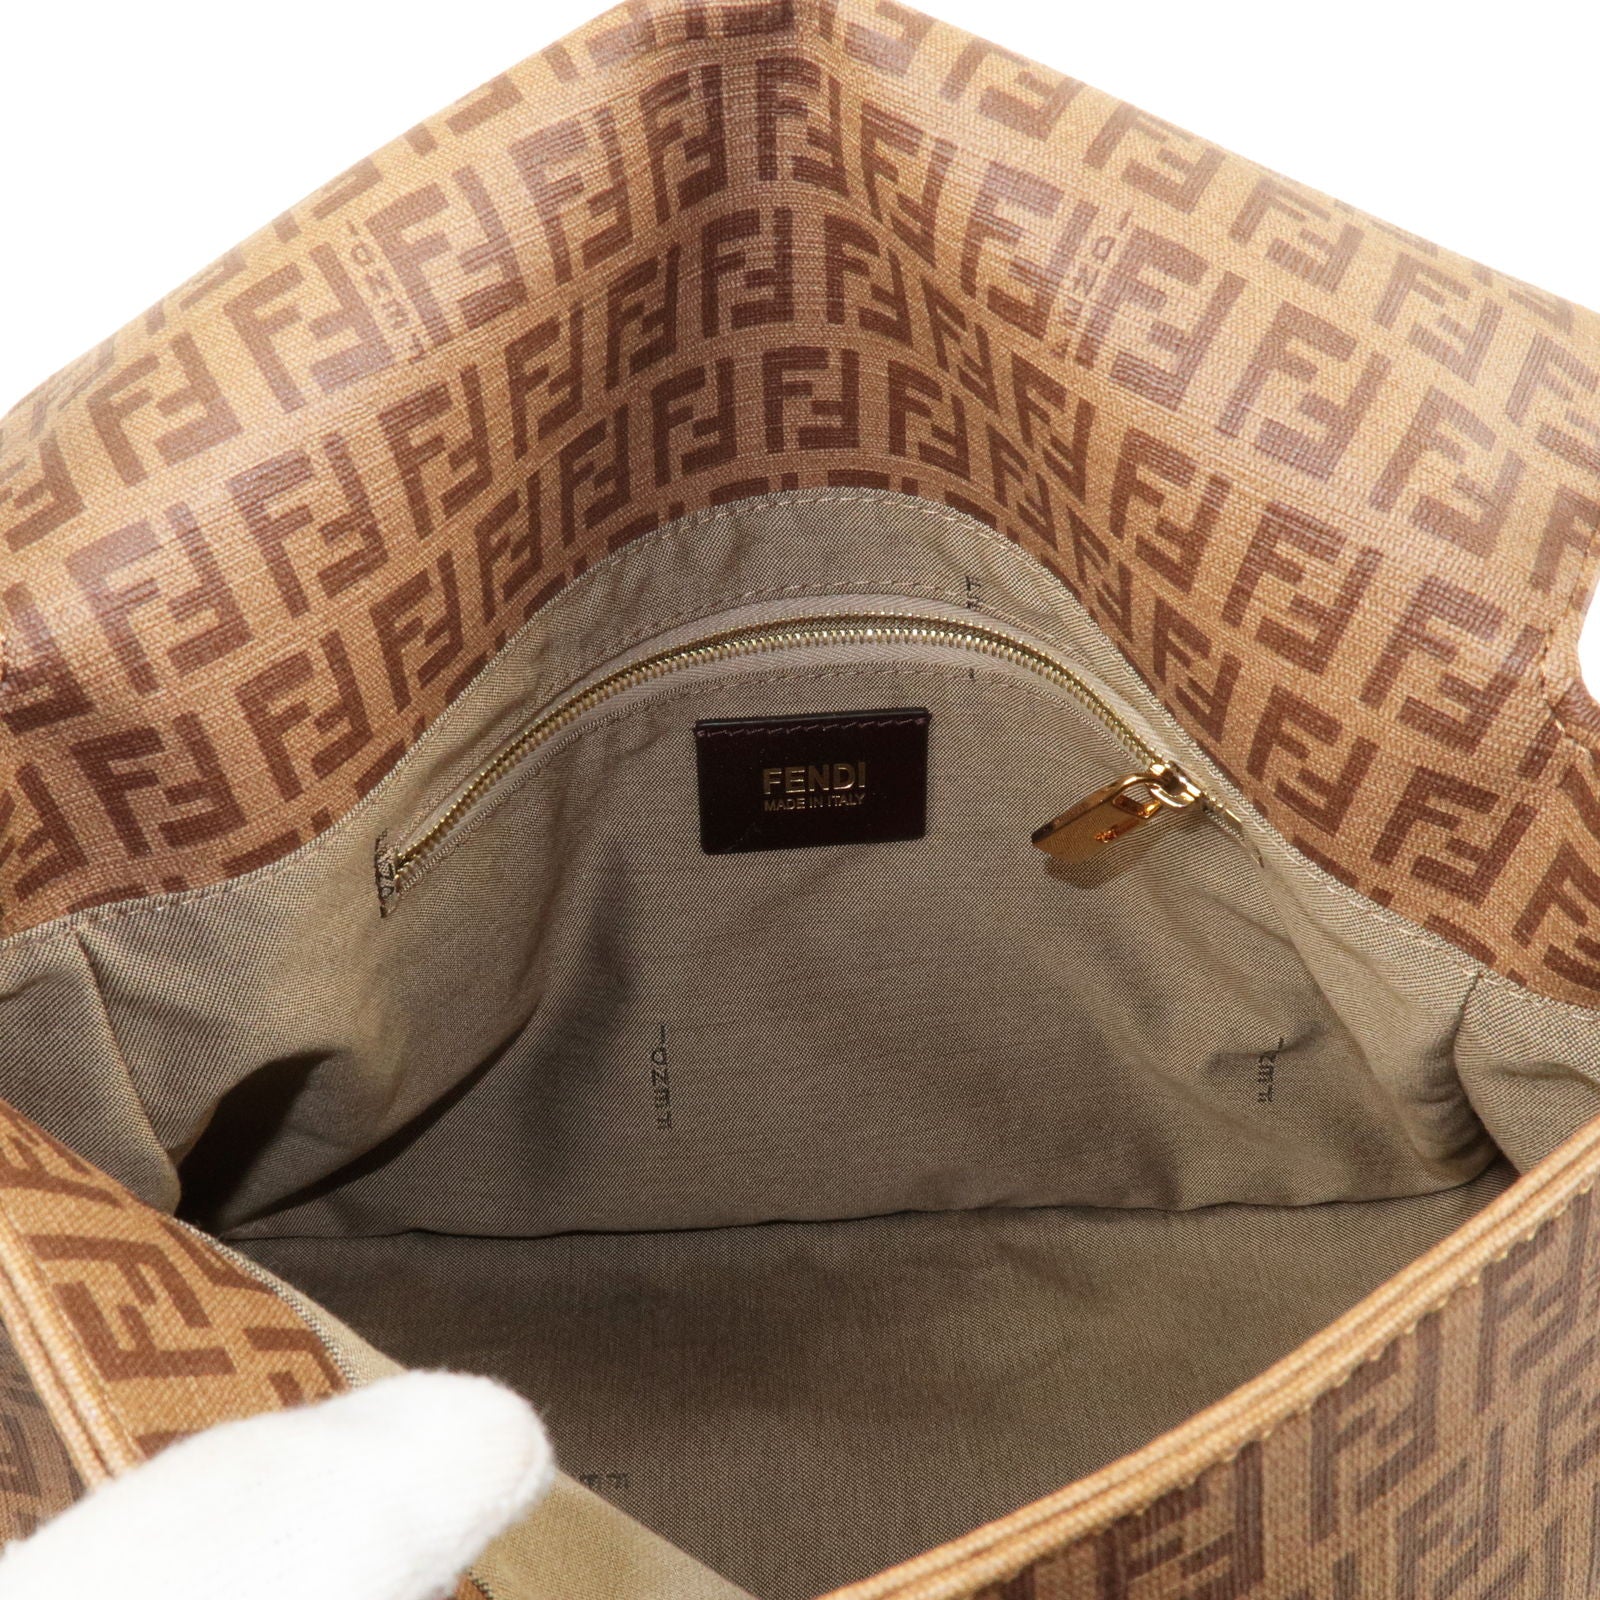 Made In Italy Leather Baguette Shoulder Bag, Handbags